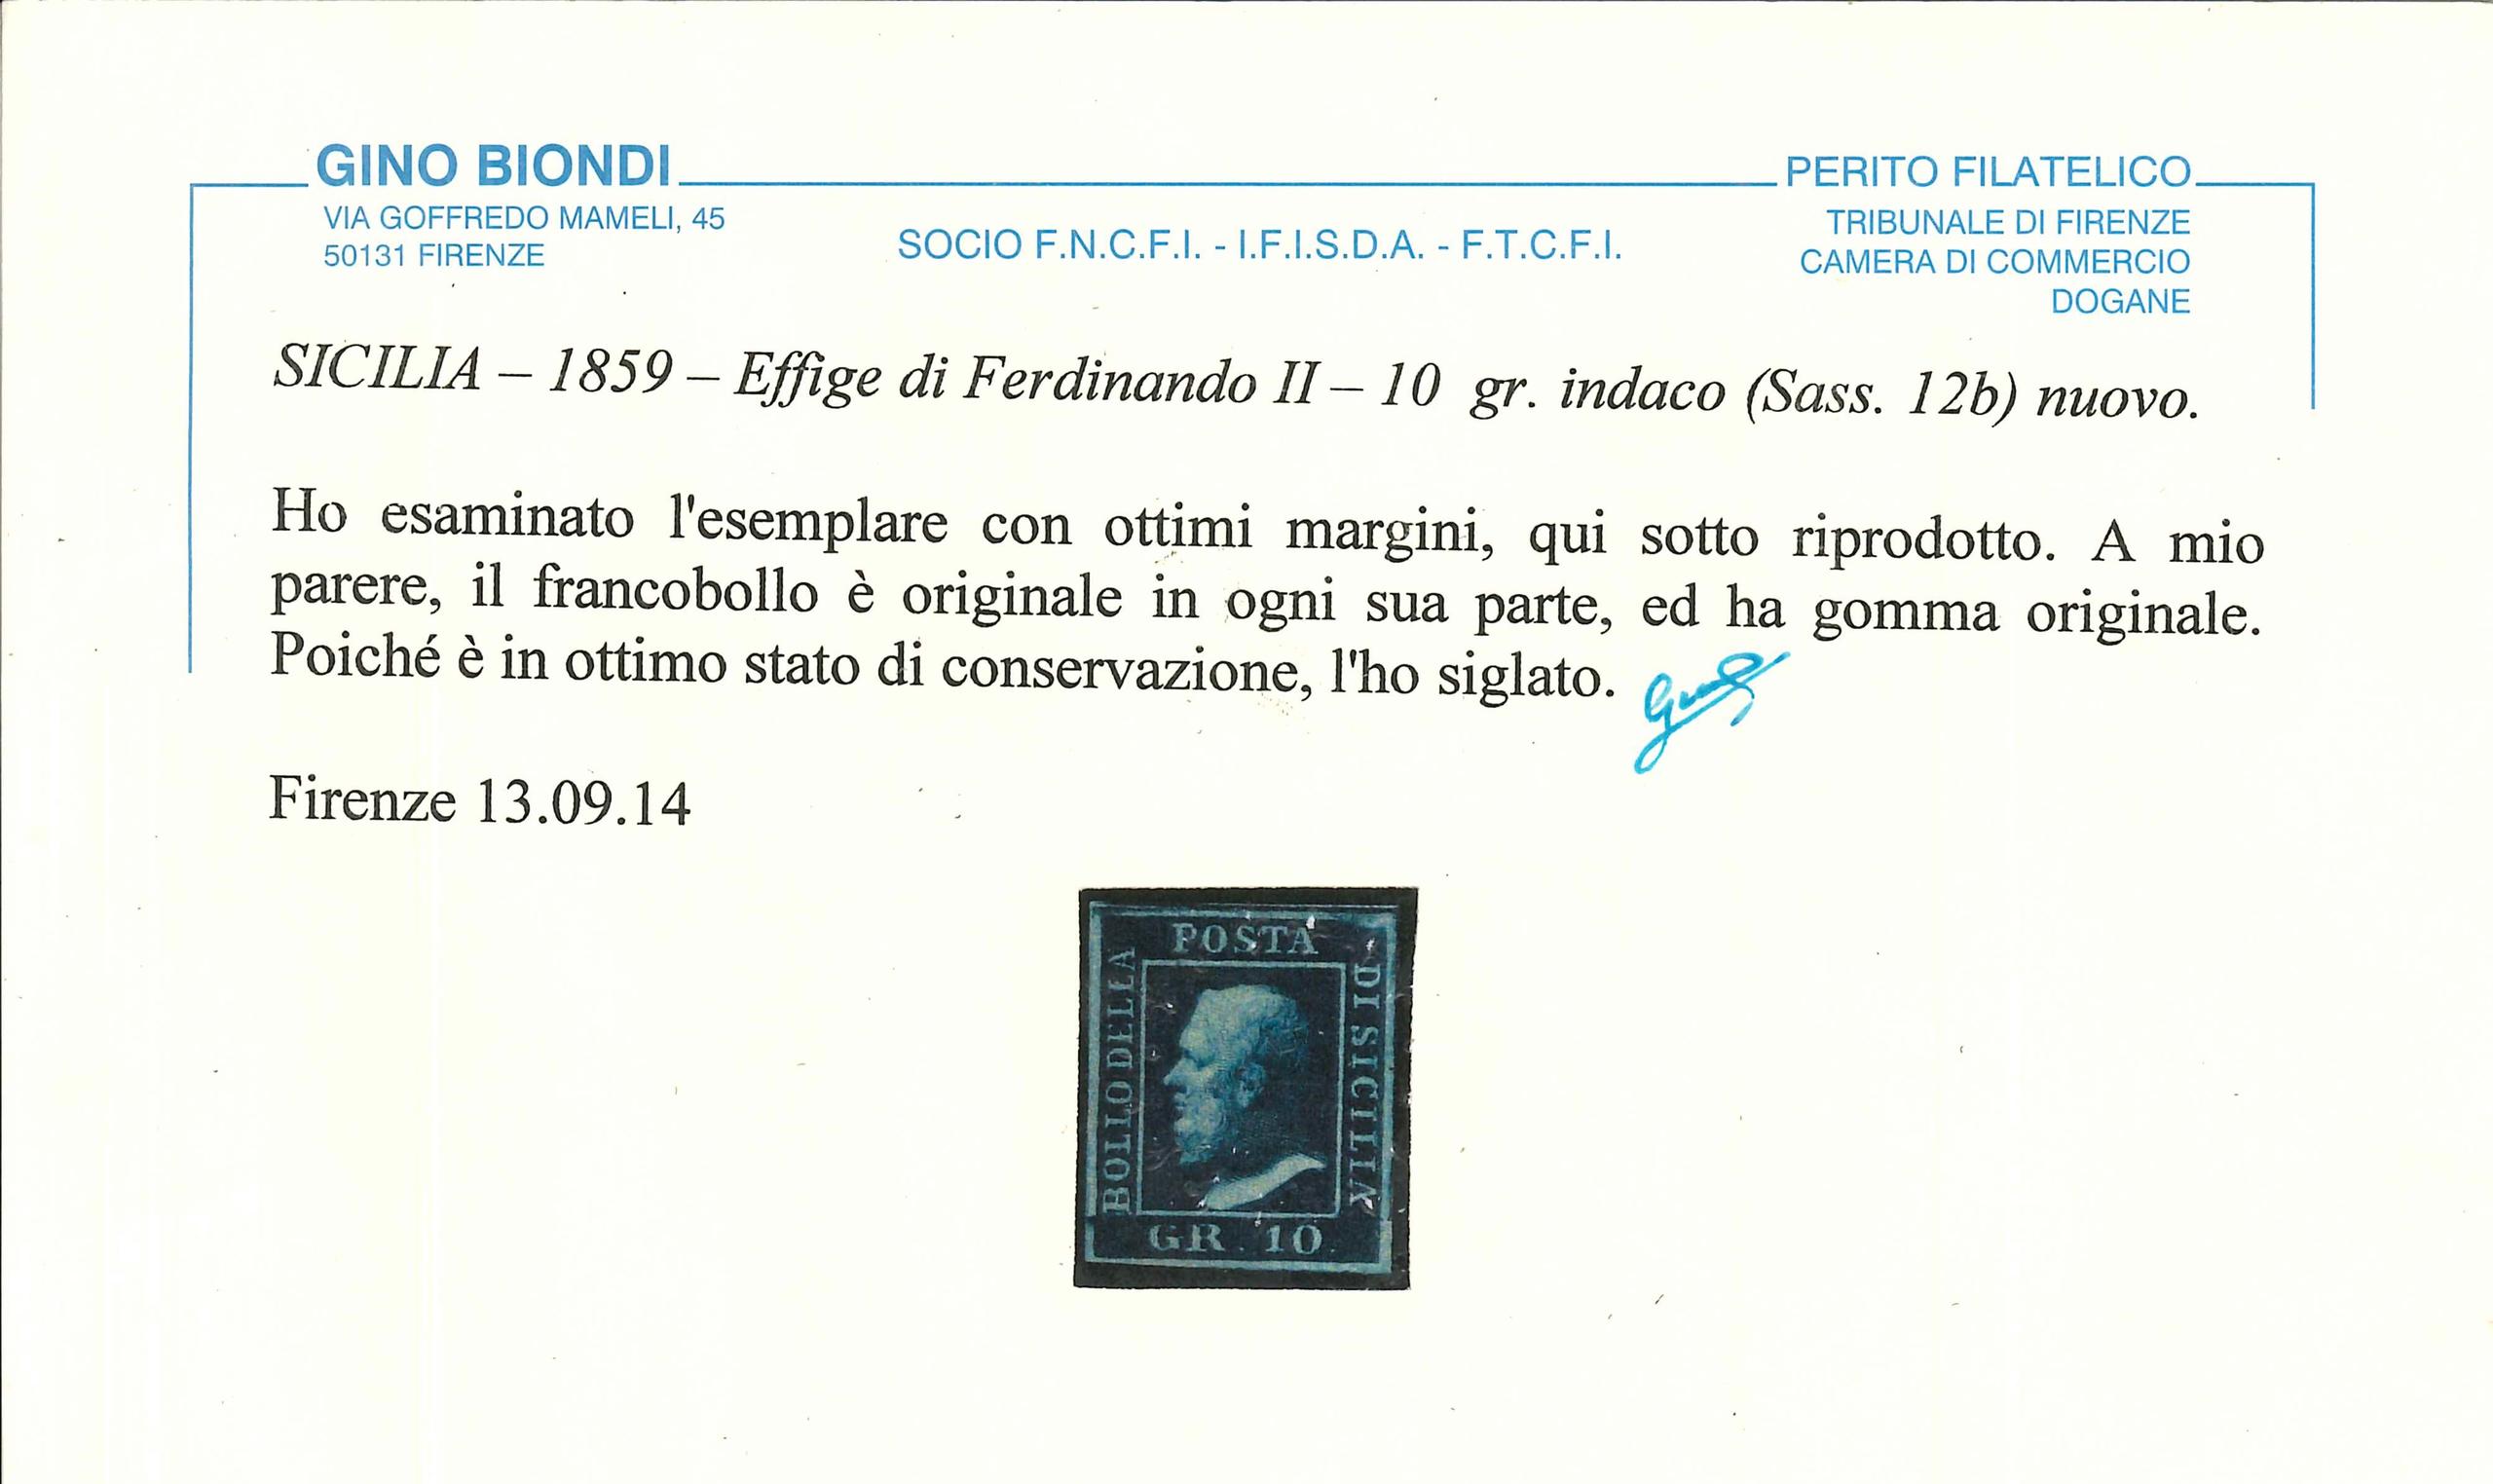 ASI SICILIA - 1859 TL (Catalogo sassone n.° 12 b INDACO)